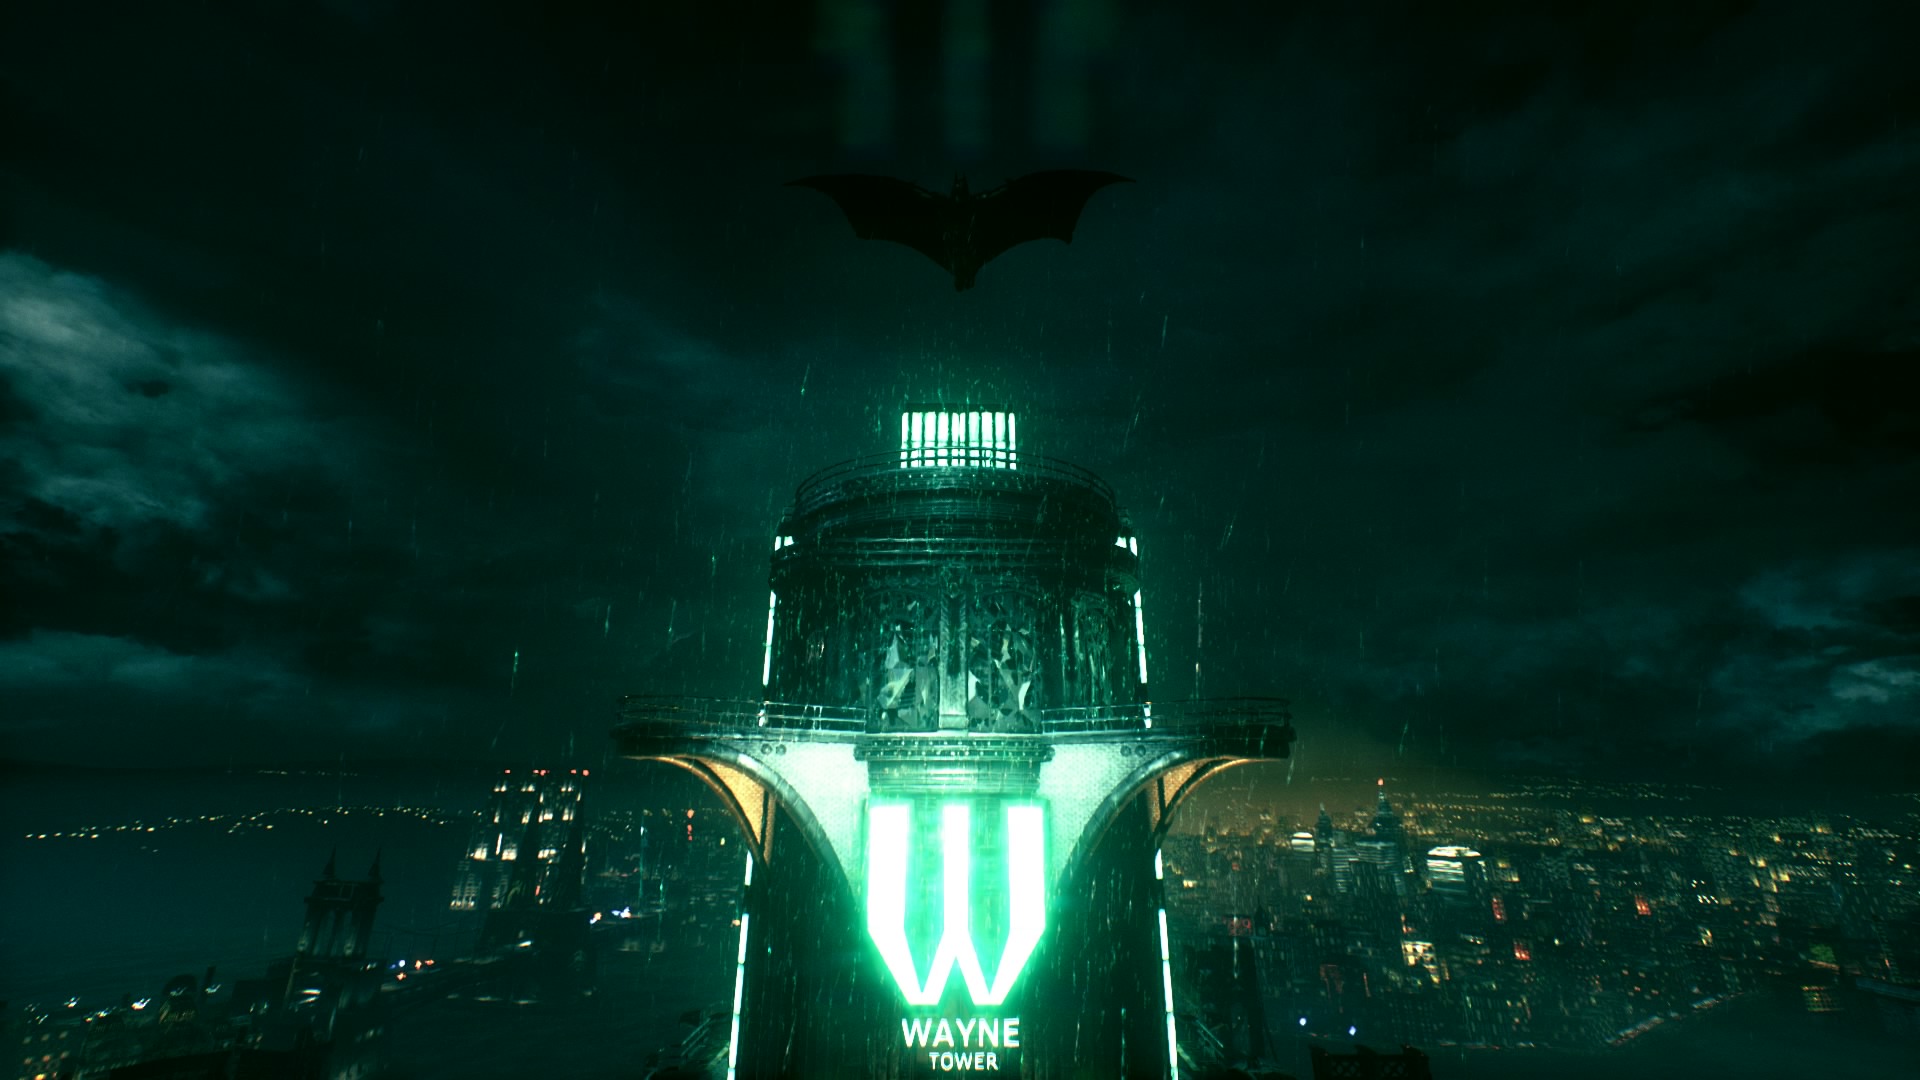 Bruce Wayne Goes Mobile in Batman: Arkham City Lockdown